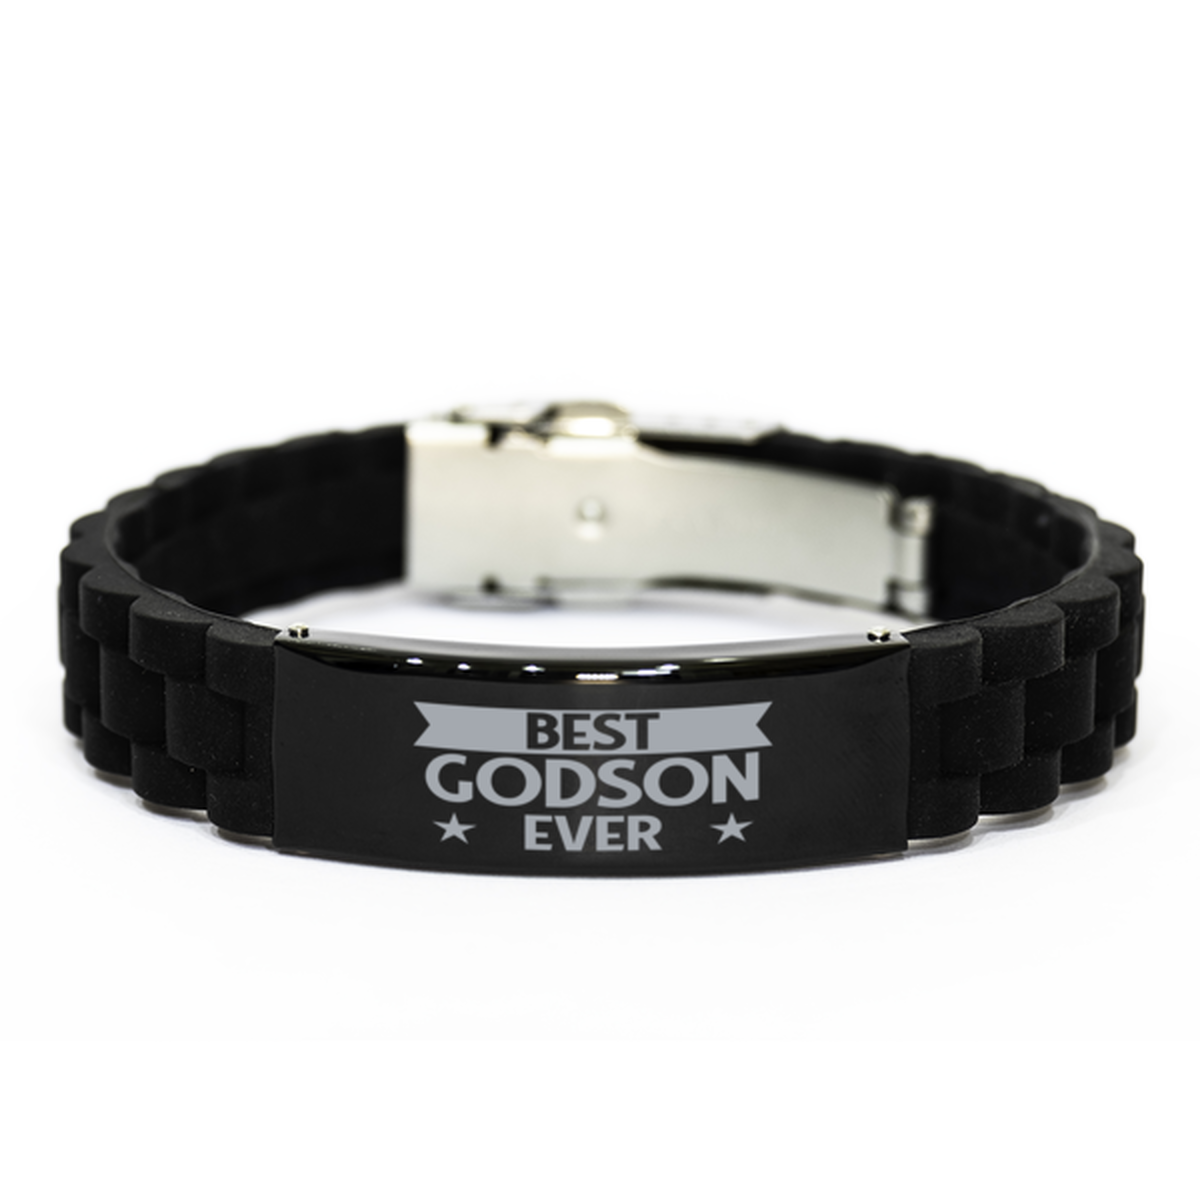 Best Godson Ever Godson Gifts, Funny Black Engraved Bracelet For Godson, Family Gifts For Men